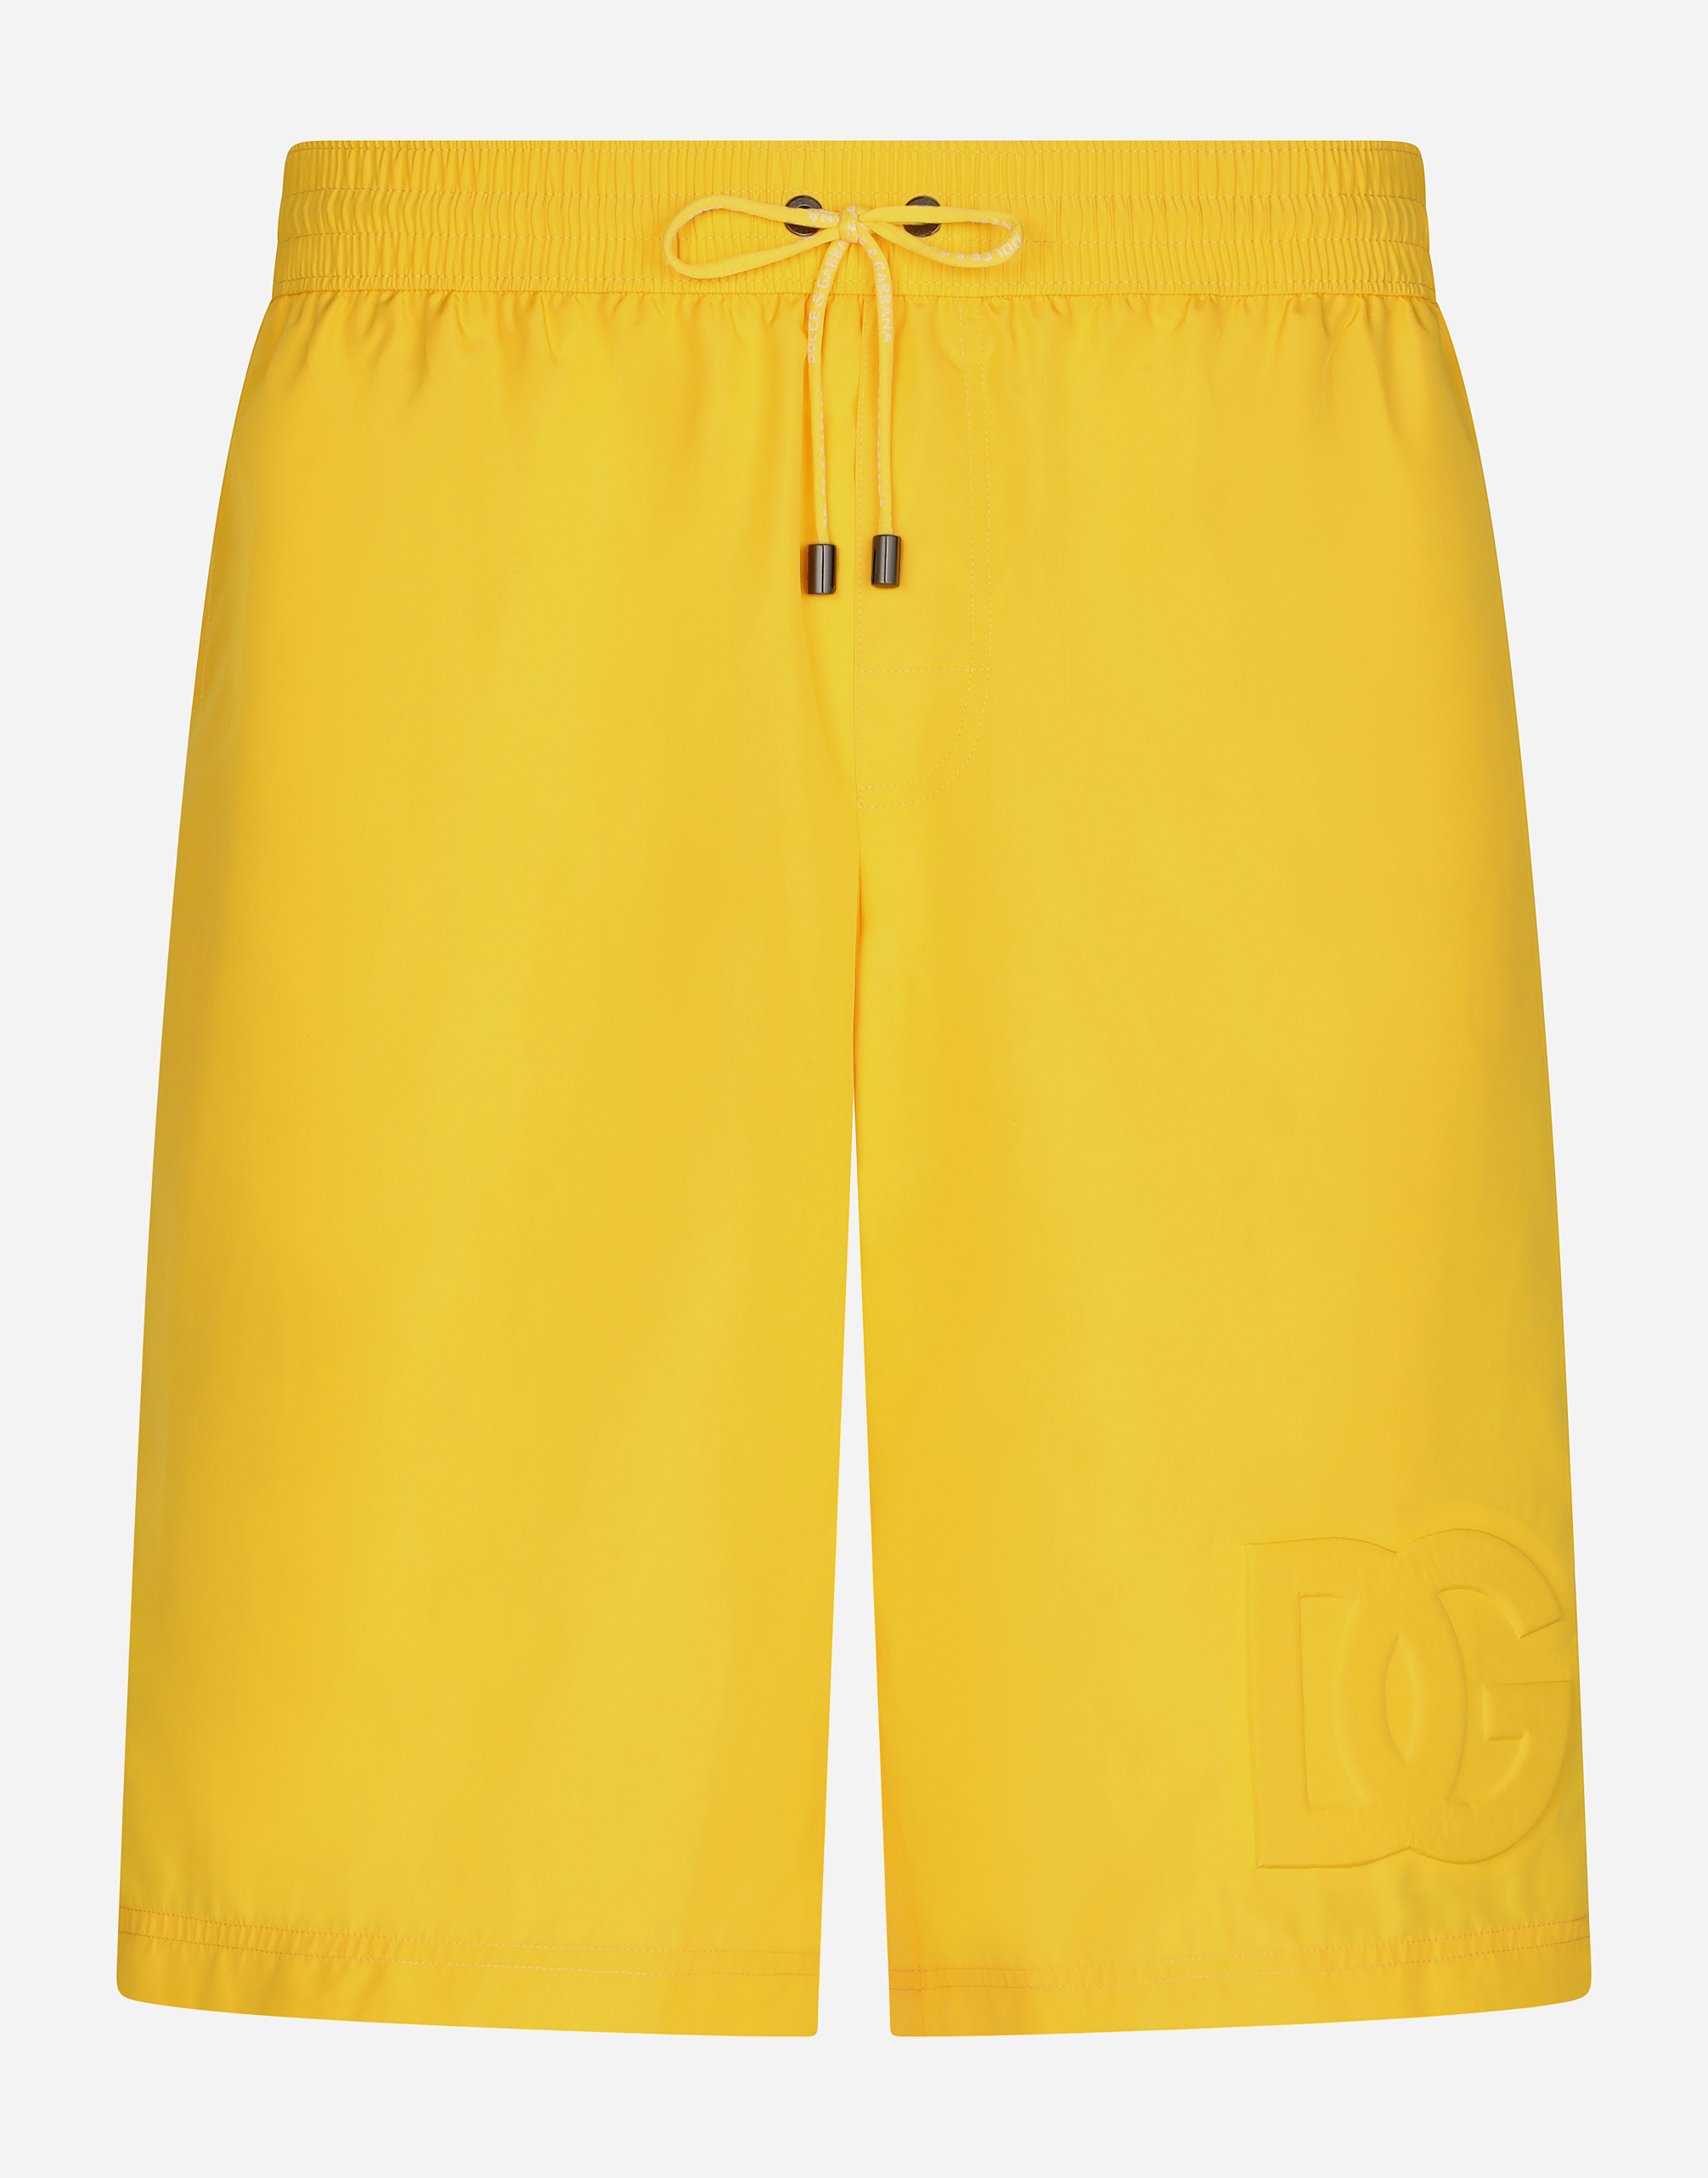 Long-leg swim trunks with embossed DG logo in Yellow